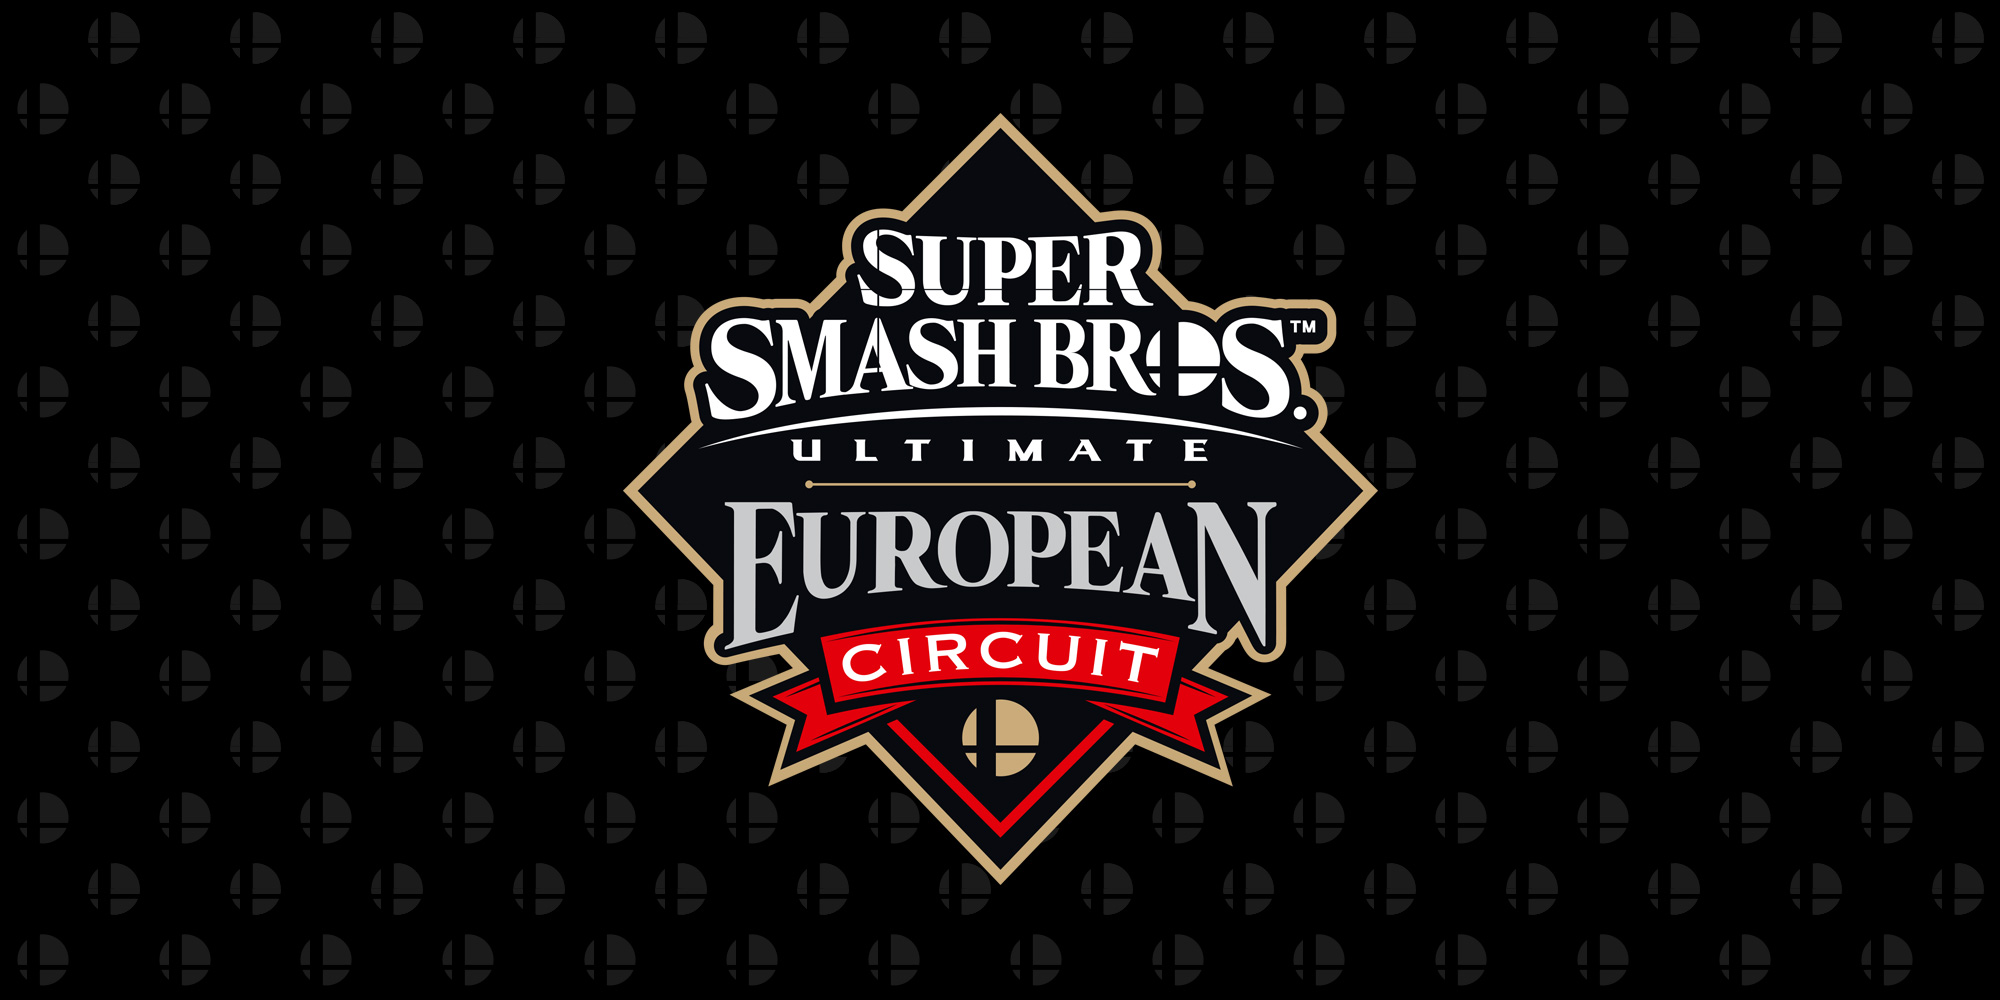 Glutonny побеждает на Valhalla III, третьем турнире серии Super Smash Bros. Ultimate European Circuit!